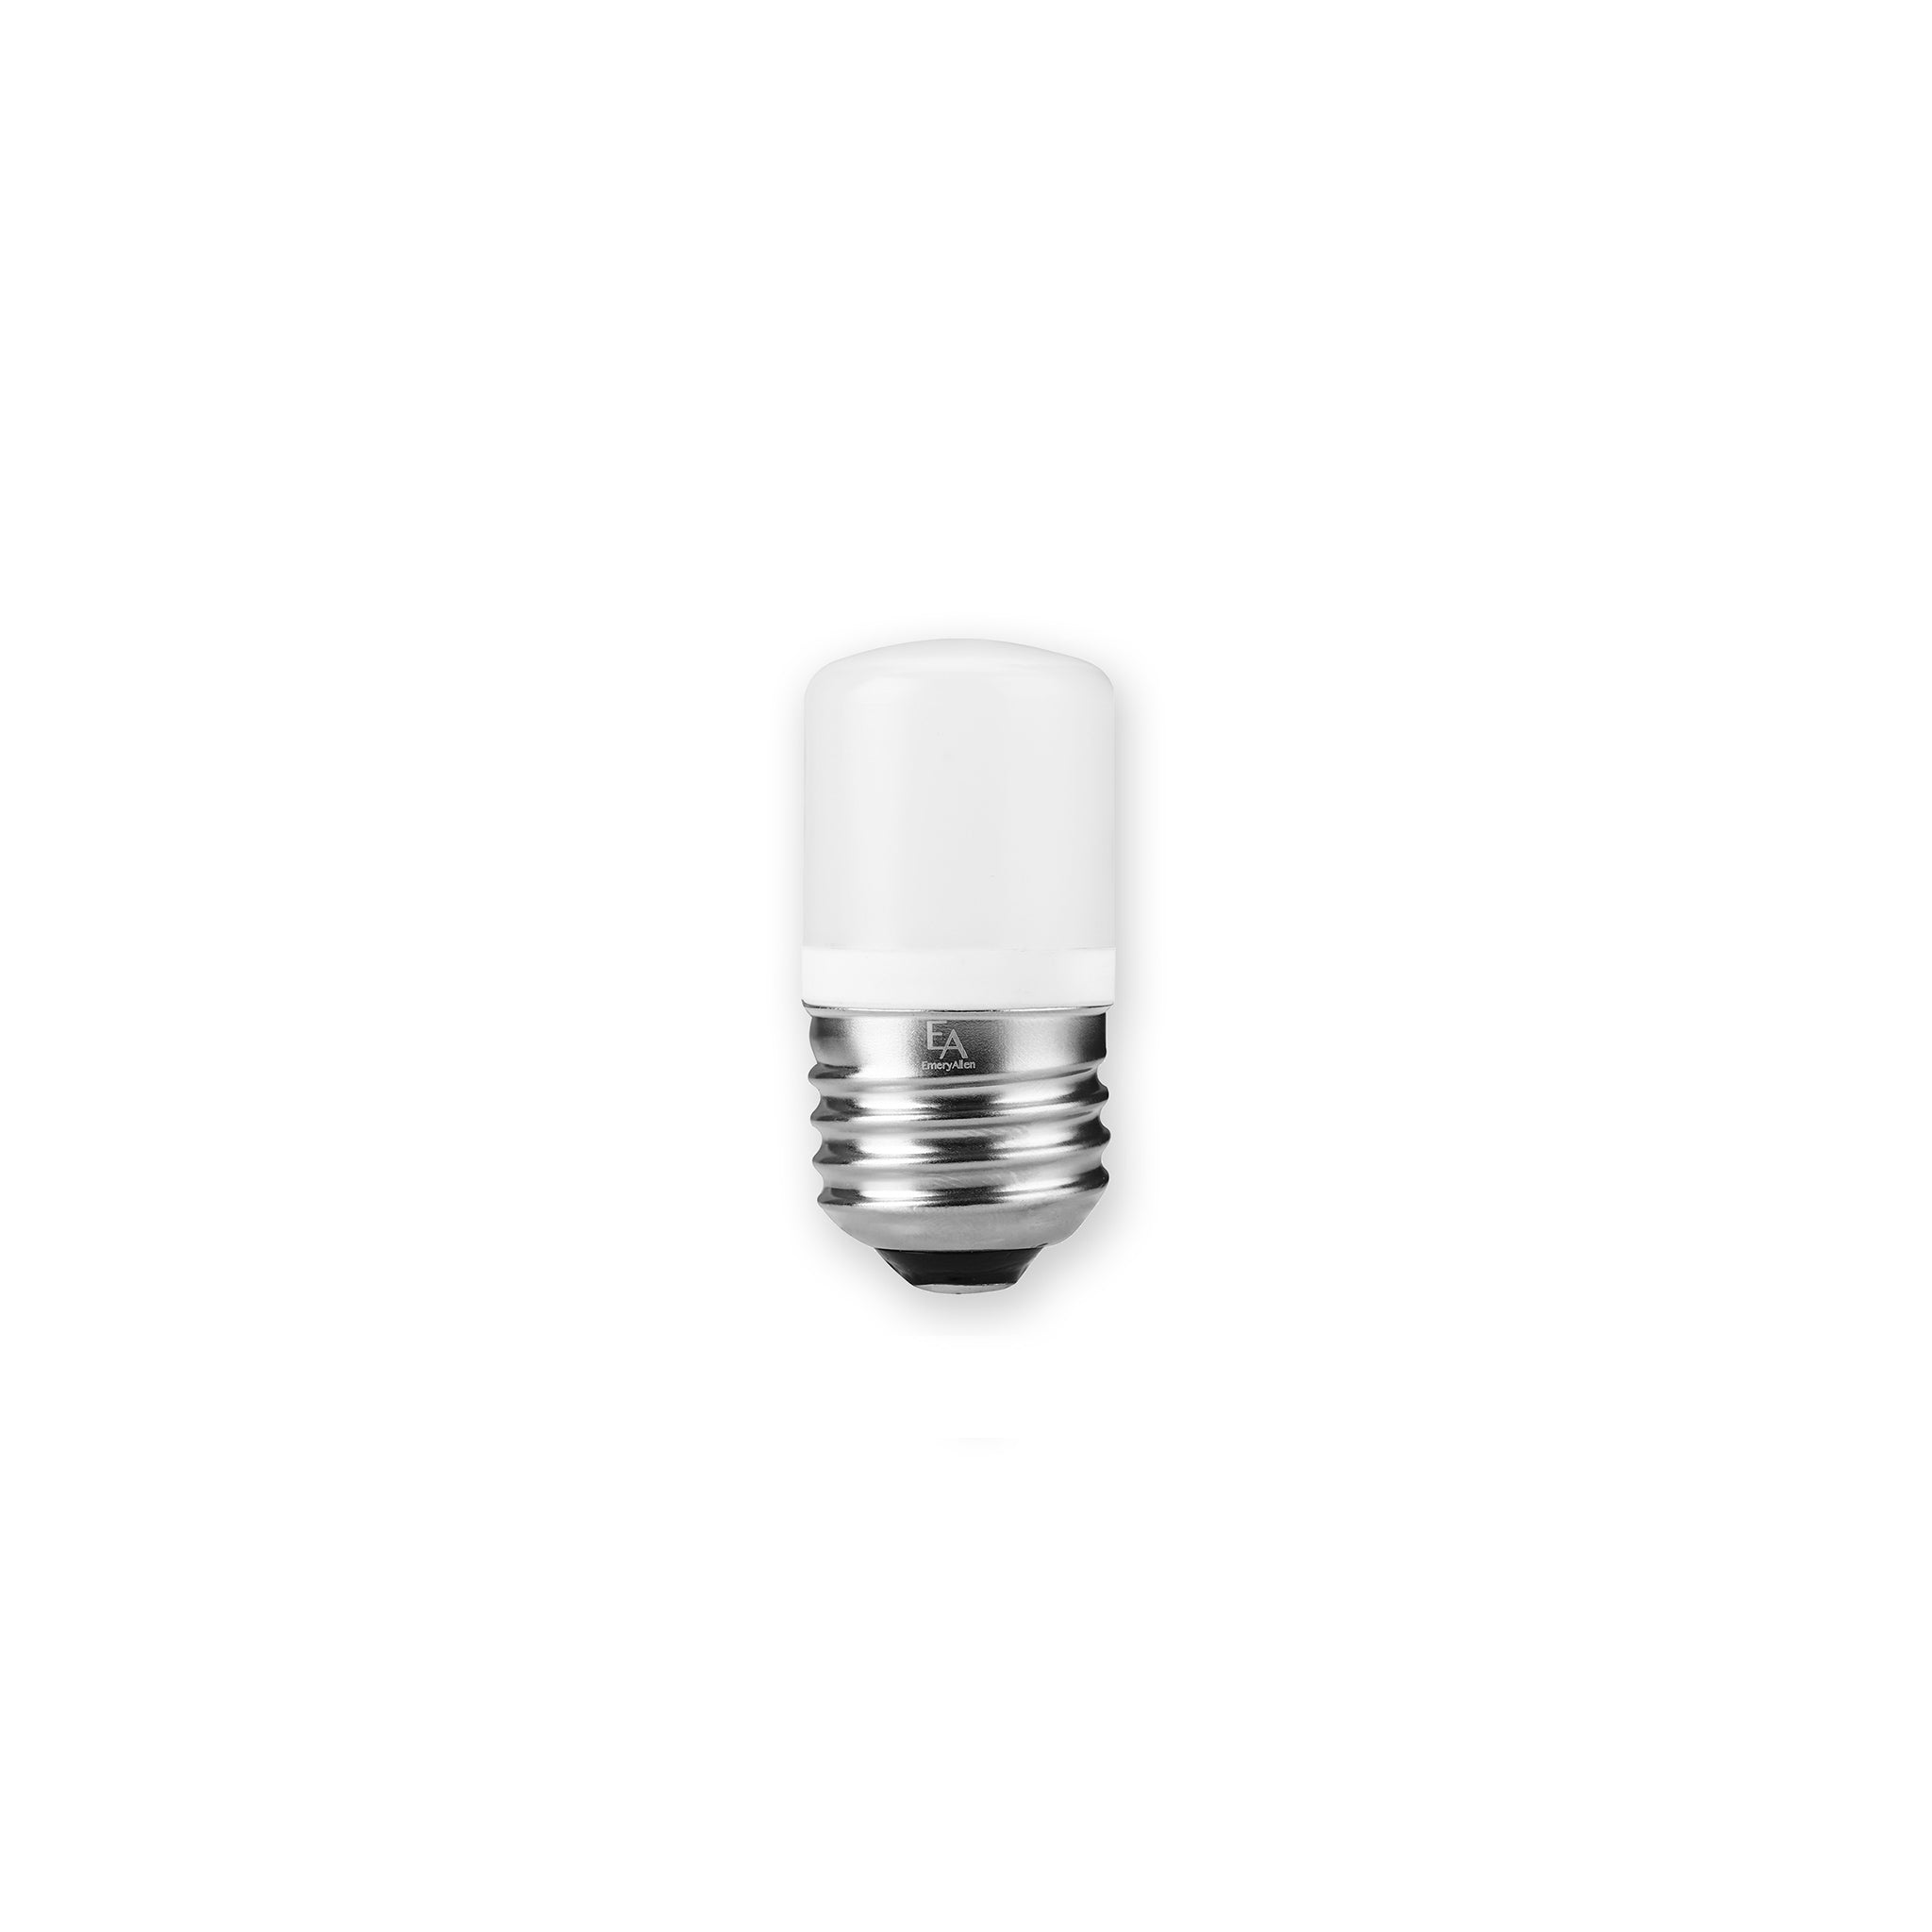 Emery Allen E26 9.5W LED Light Bulb by Cedar & Moss